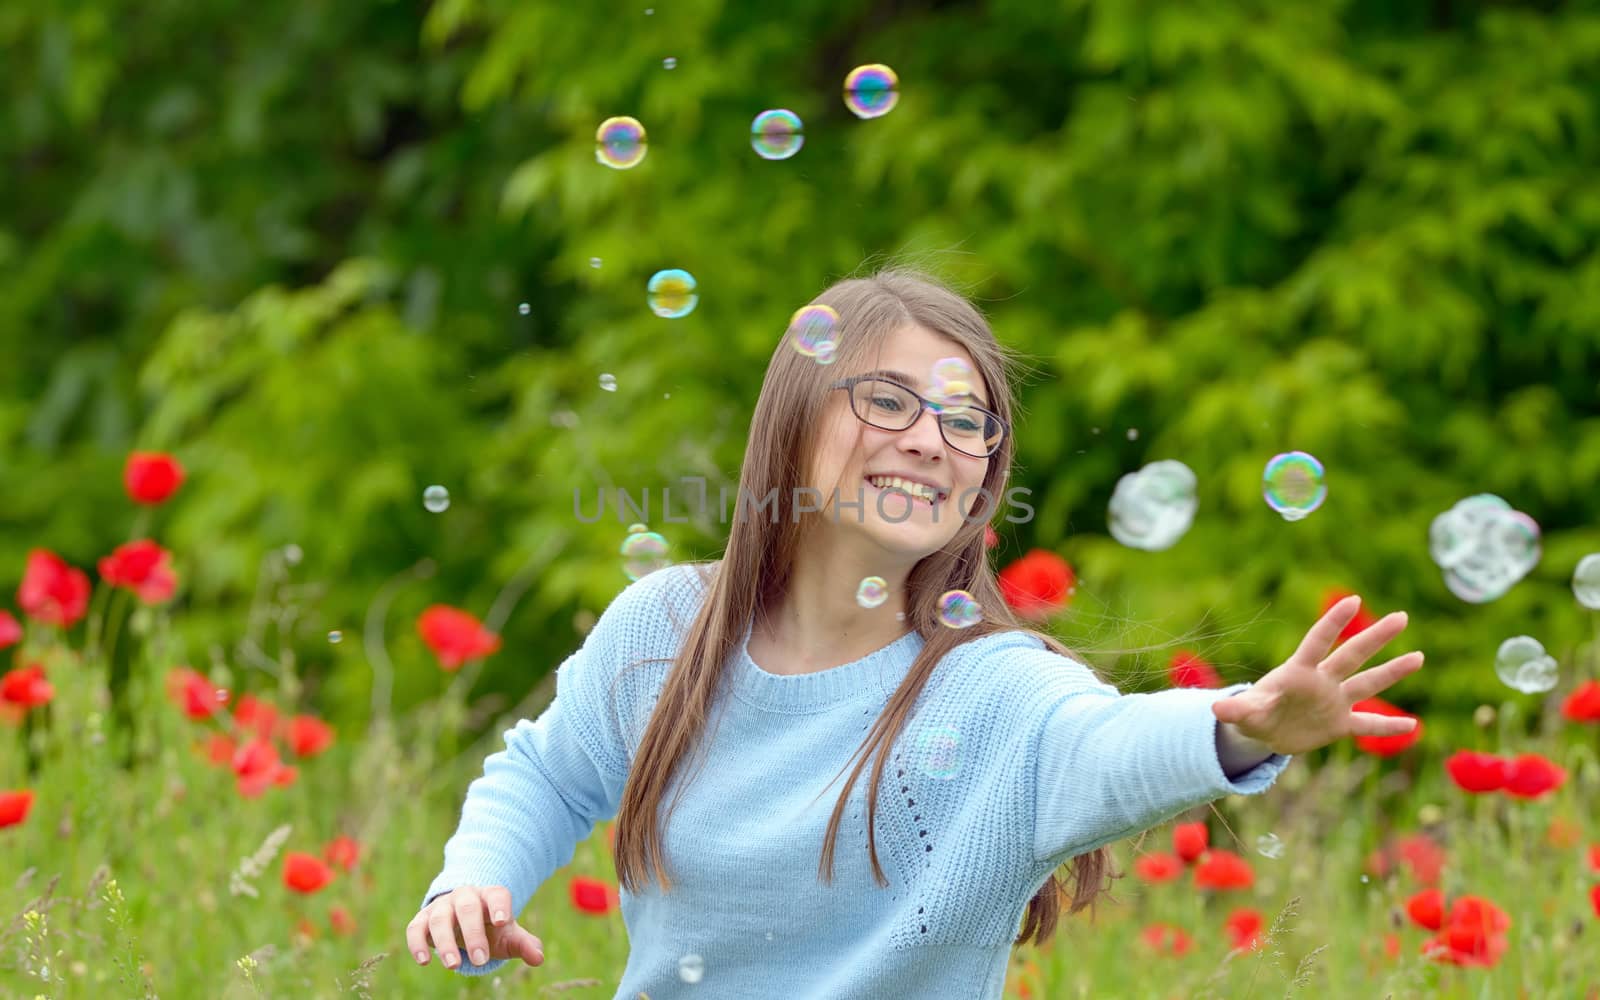 Girl Catching Soap Bubbles by jordachelr